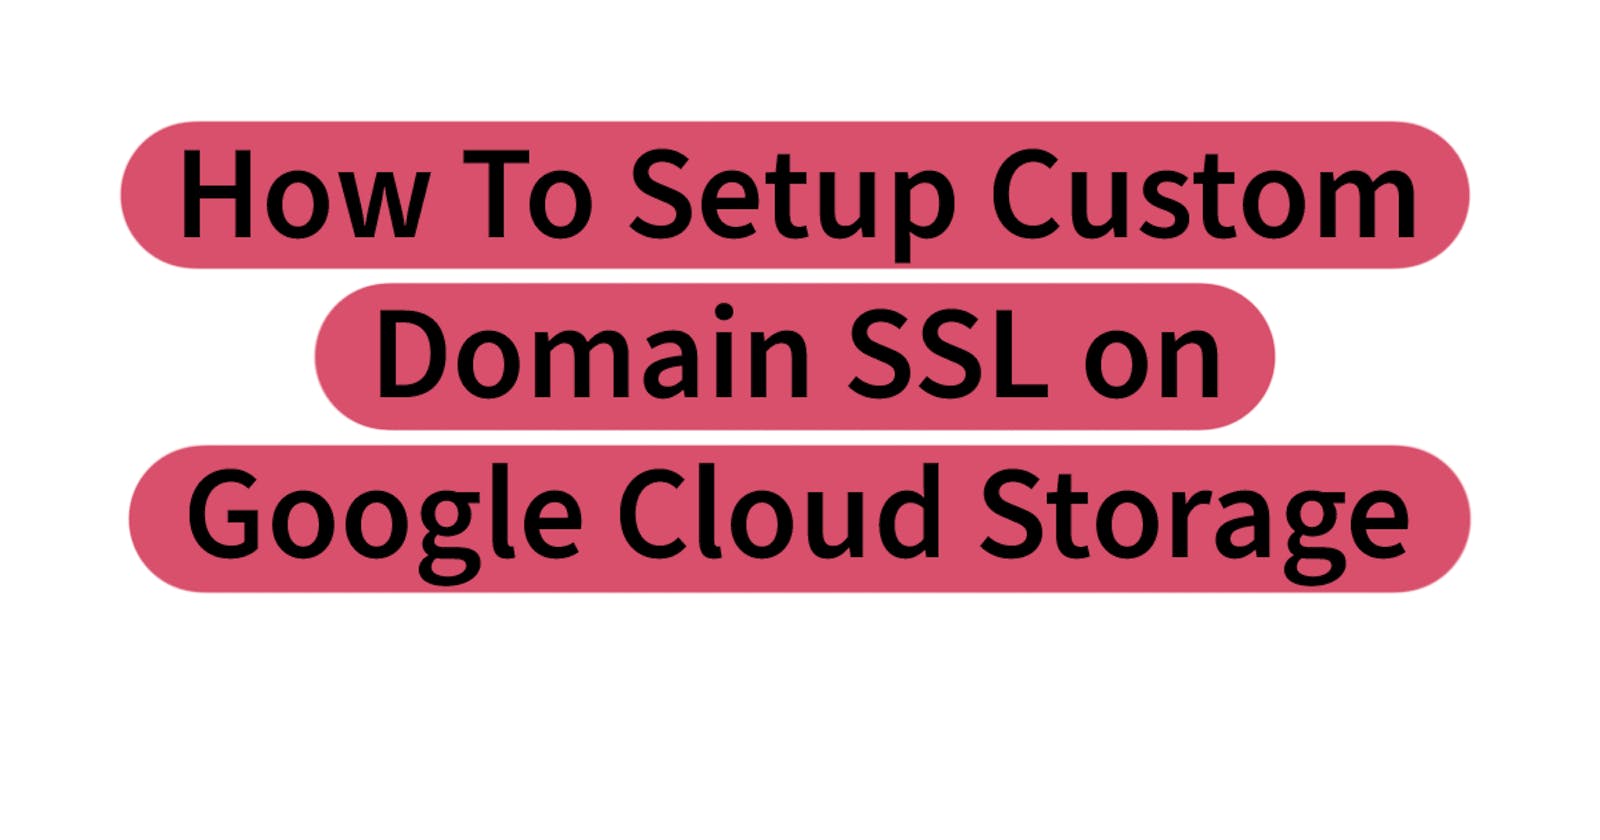 How to setup custom domain SSL on Google Cloud Storage